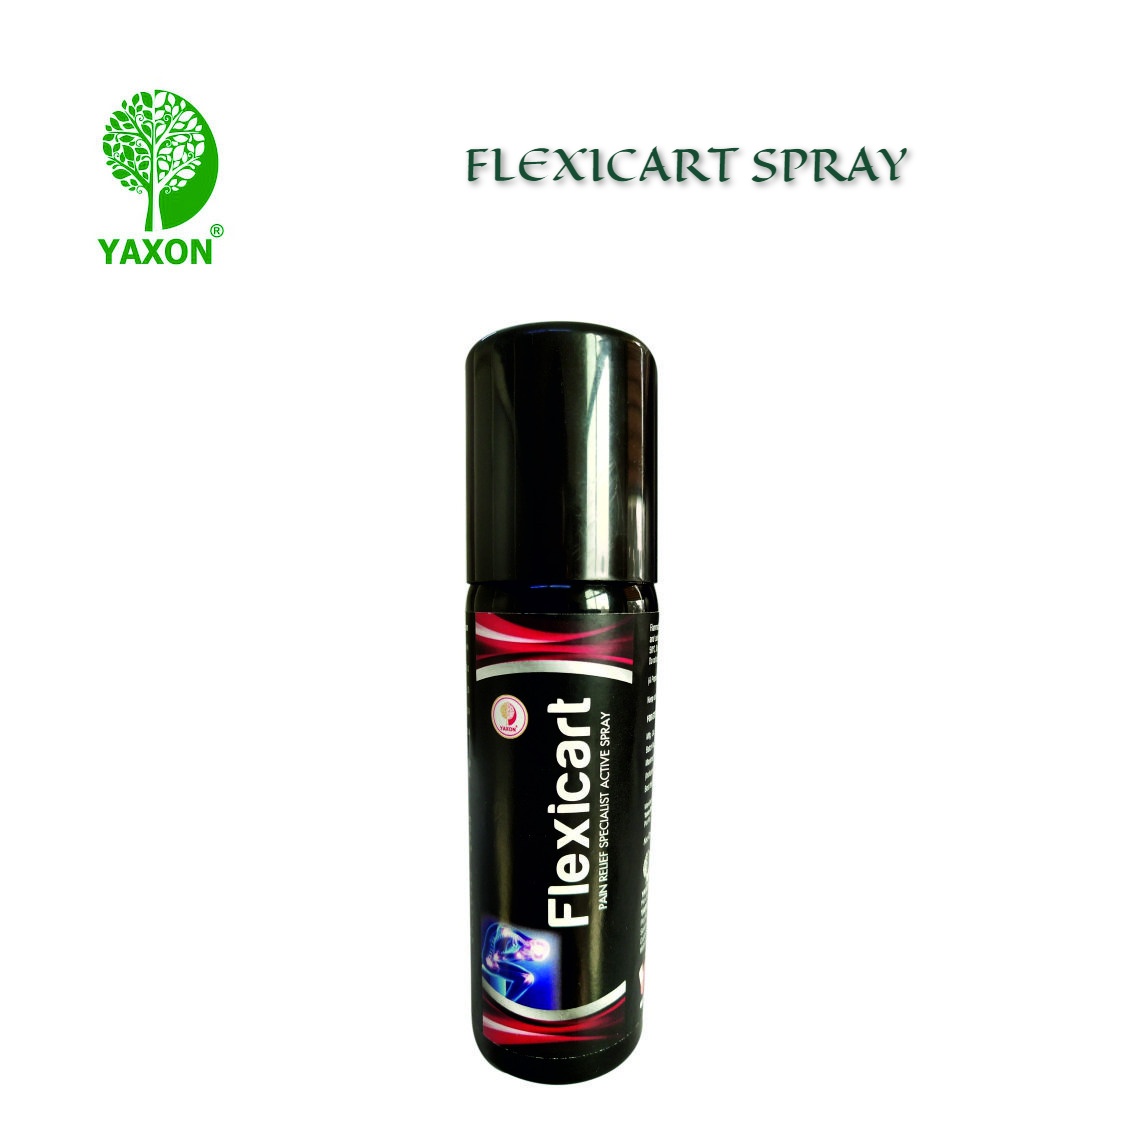 YAXON FLEXICART PAIN RELIEF Spray